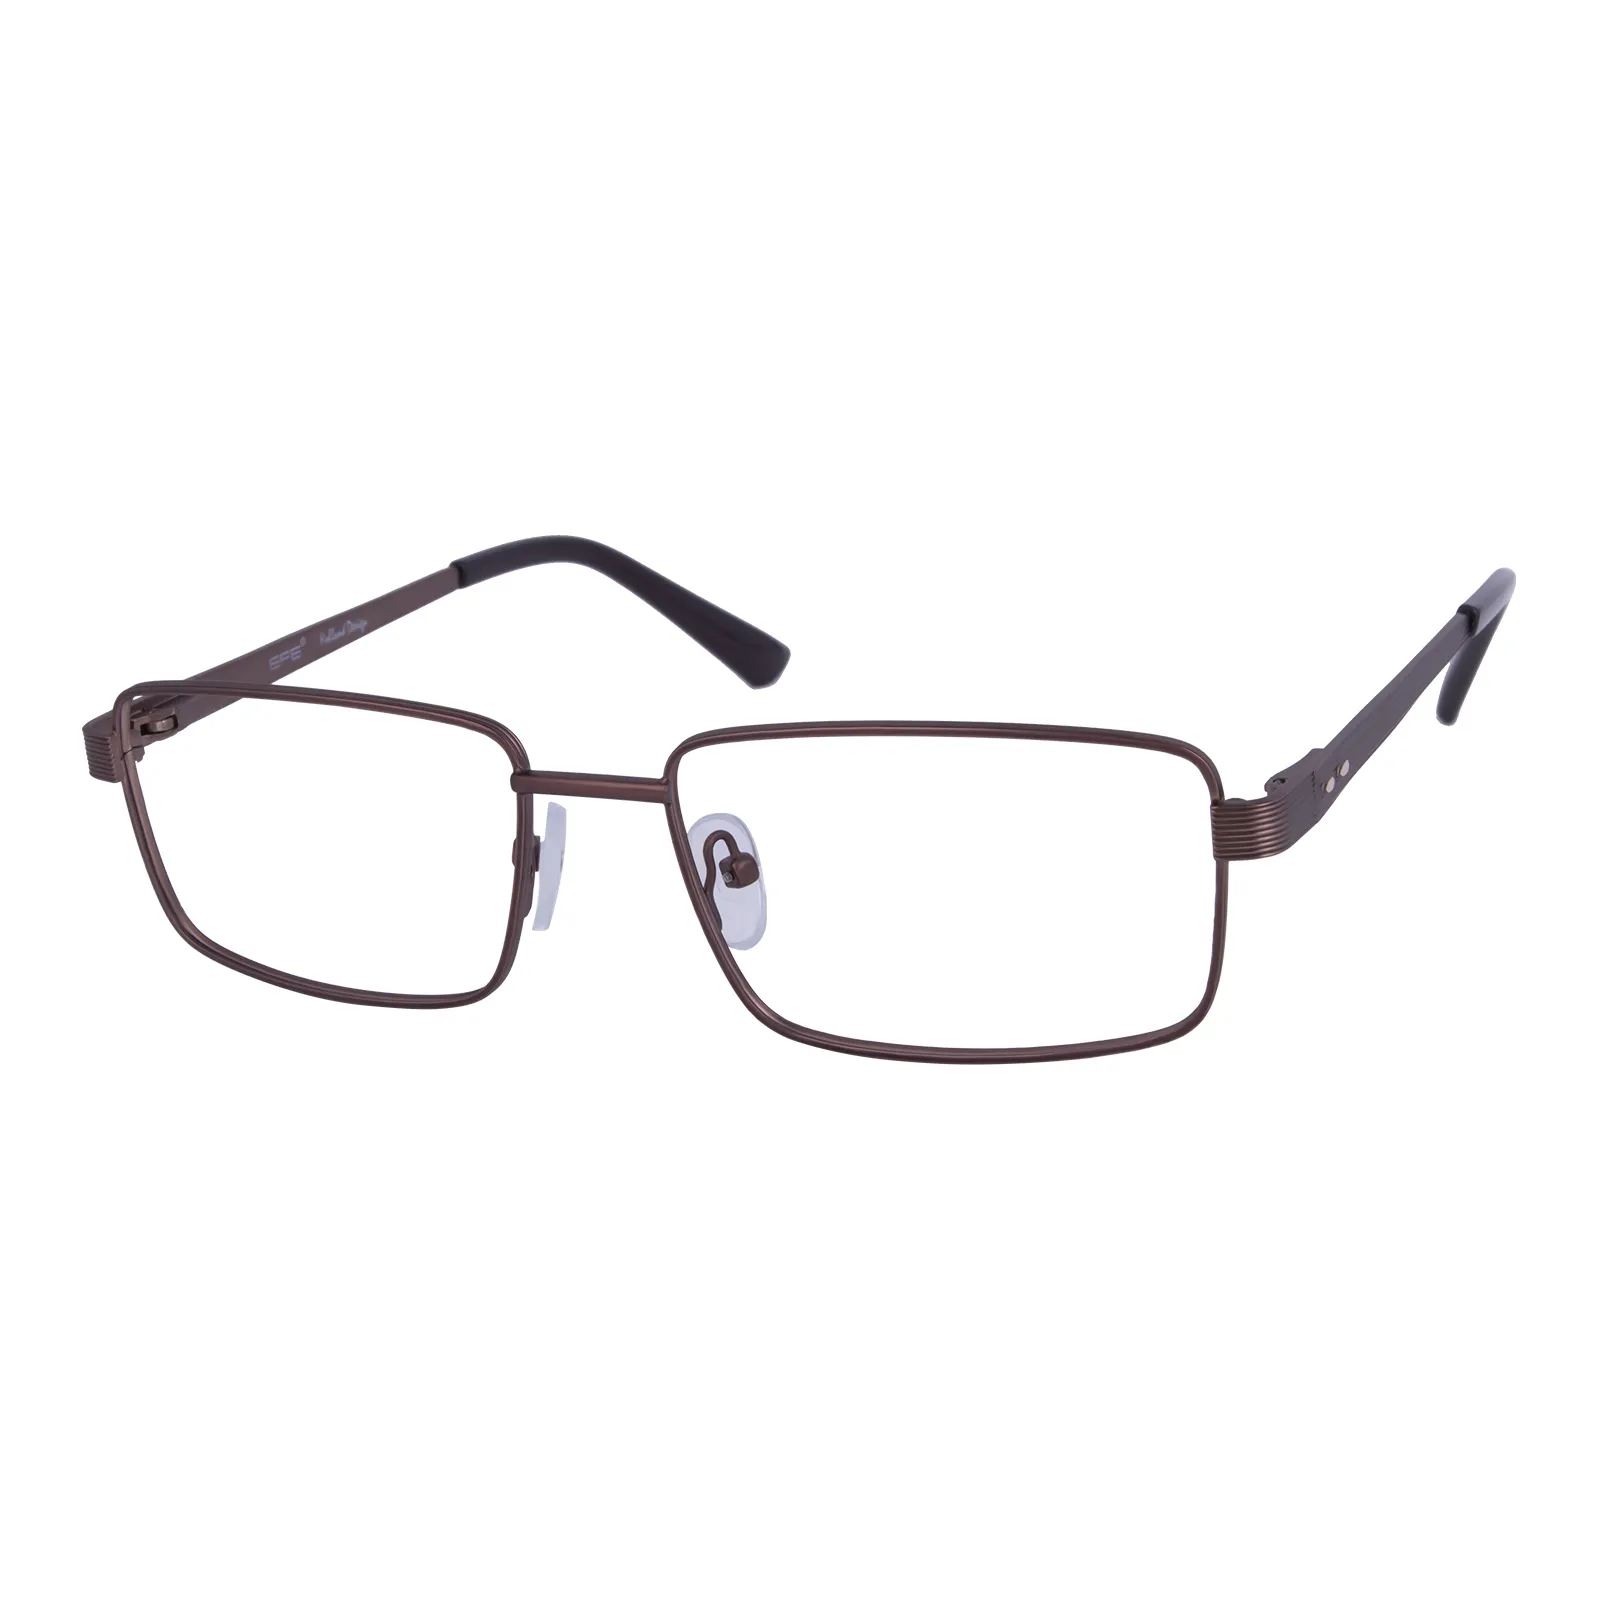 Mason - Square Brown Glasses for Men